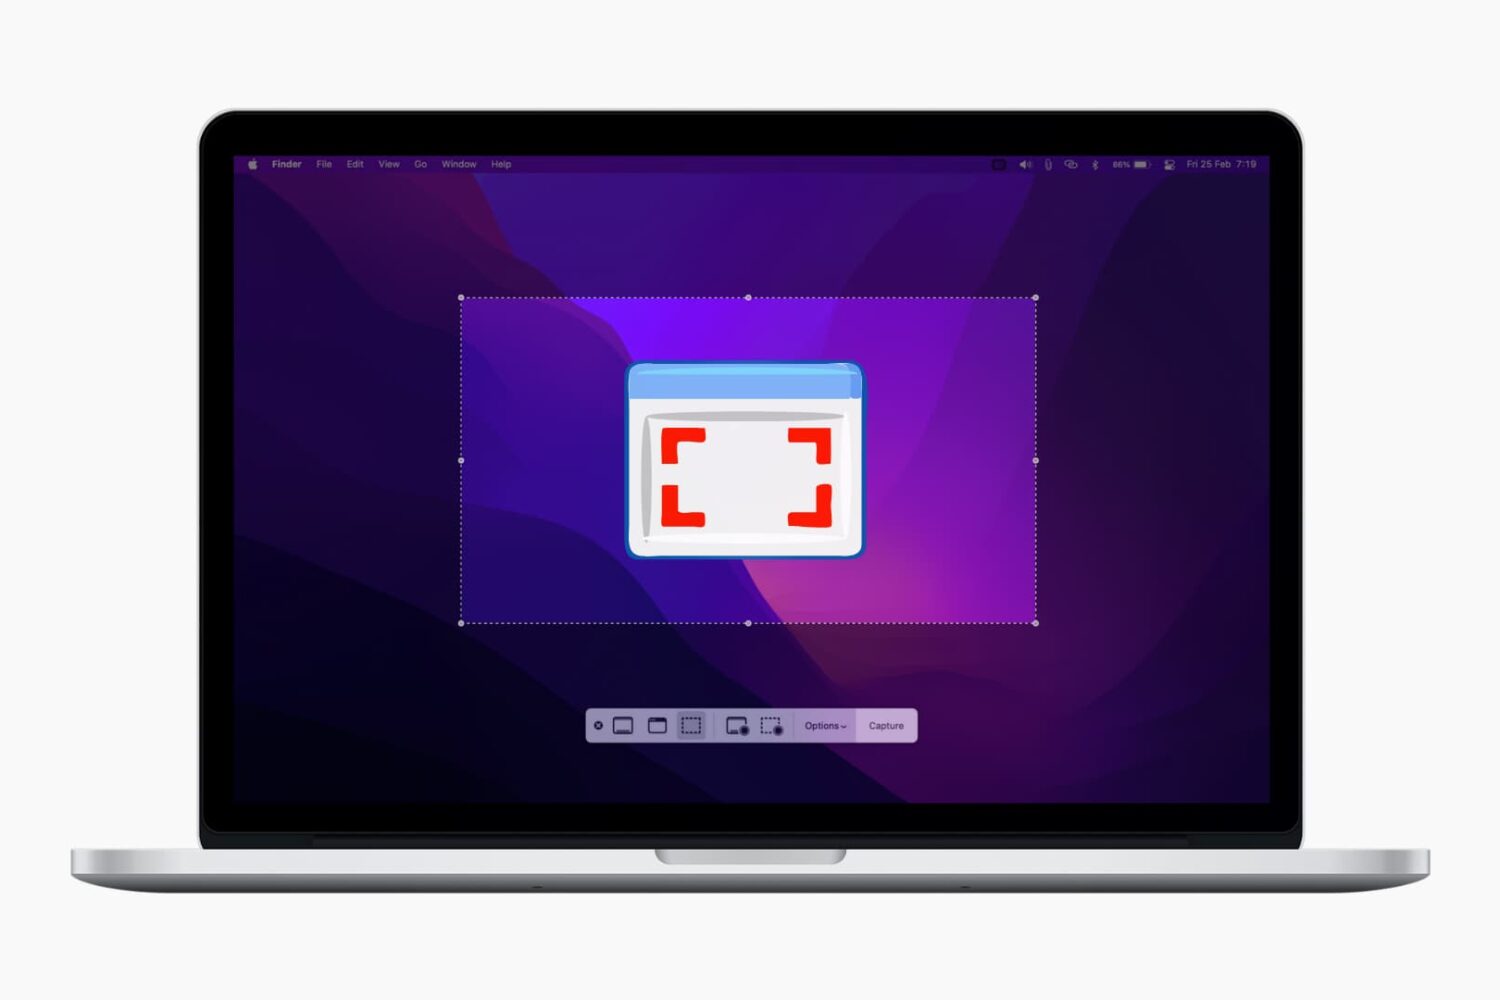 How to take screenshot on Mac